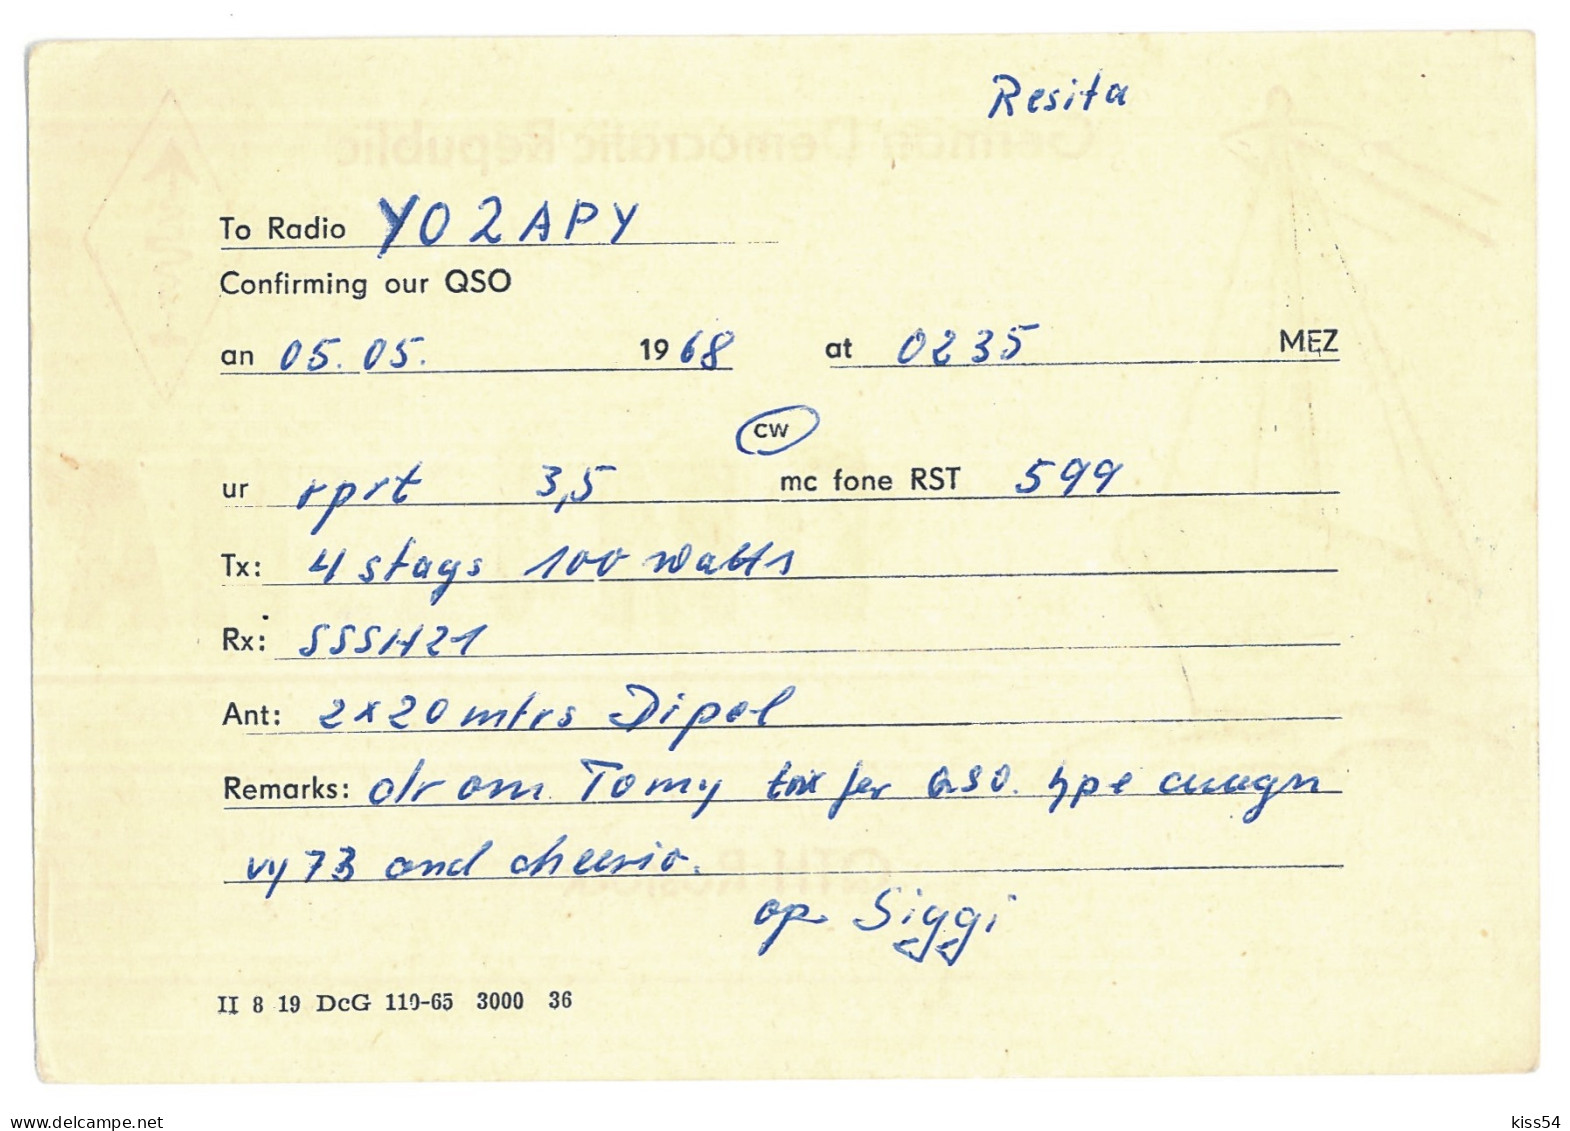 Q 32 - 361-a SHIP, German Democratic Republic - 1968 - Radio Amateur